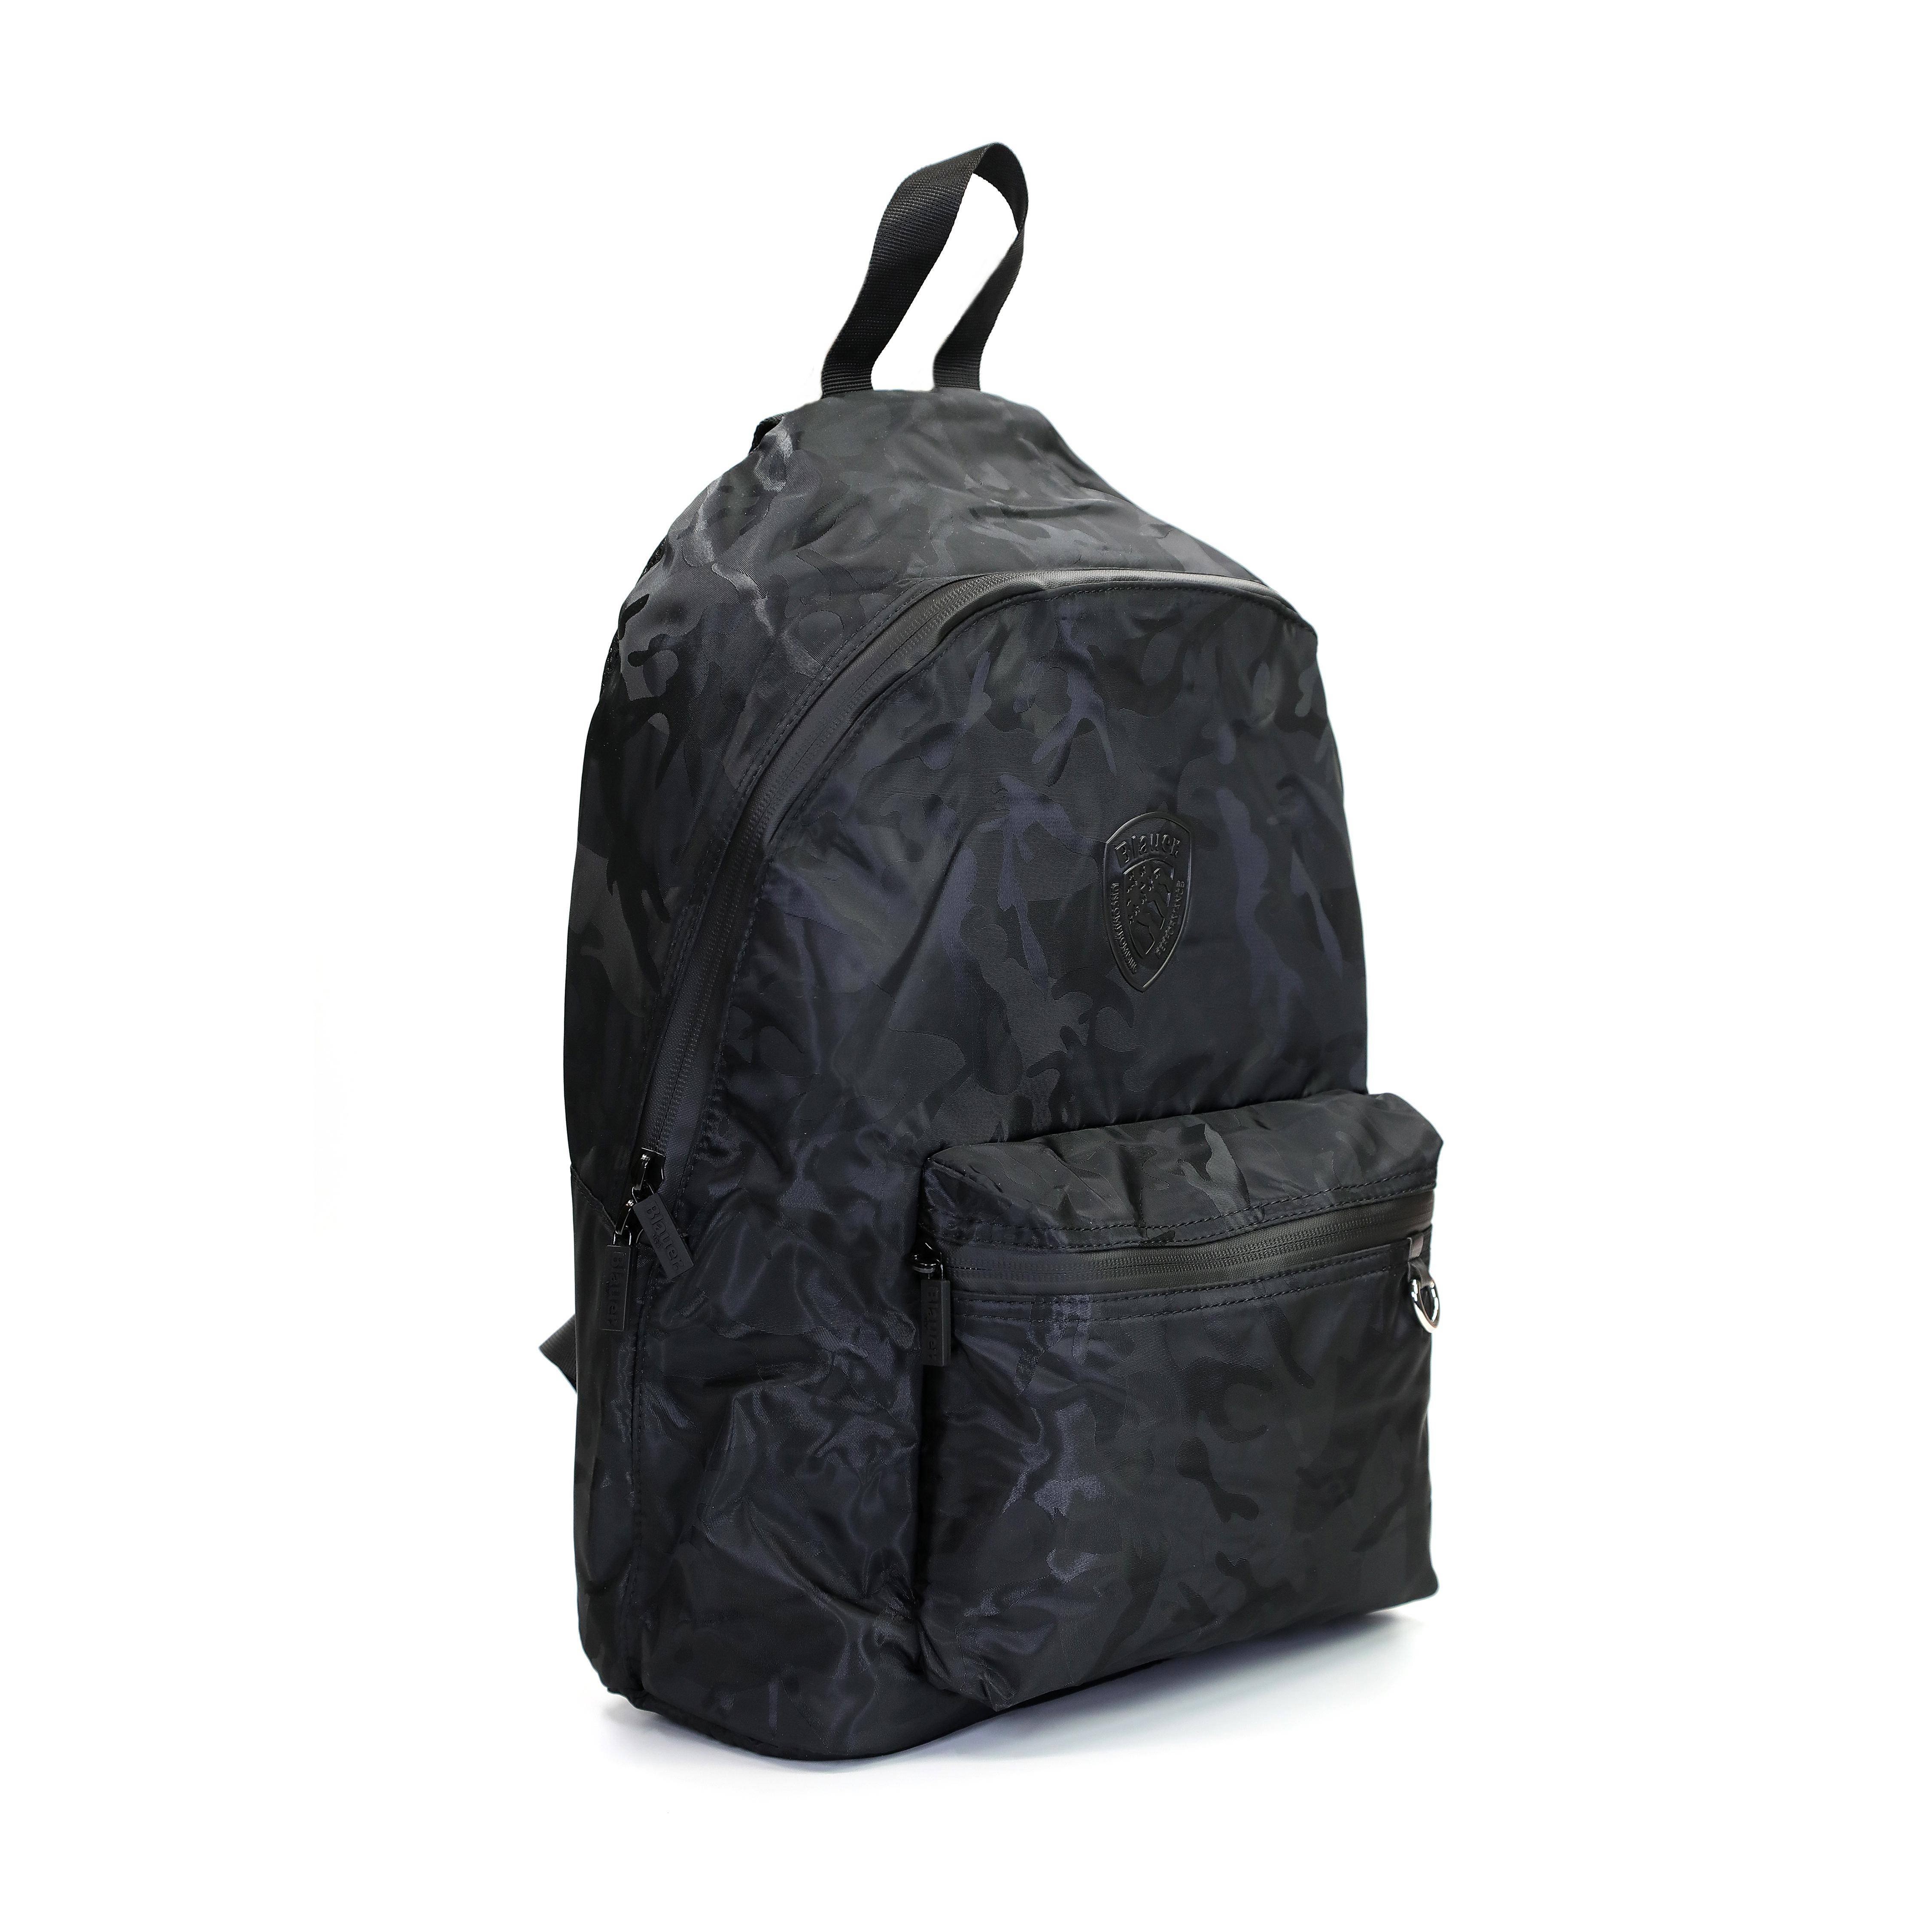 Мужской рюкзак Blauer, черный, размер ONE SIZE - фото 2